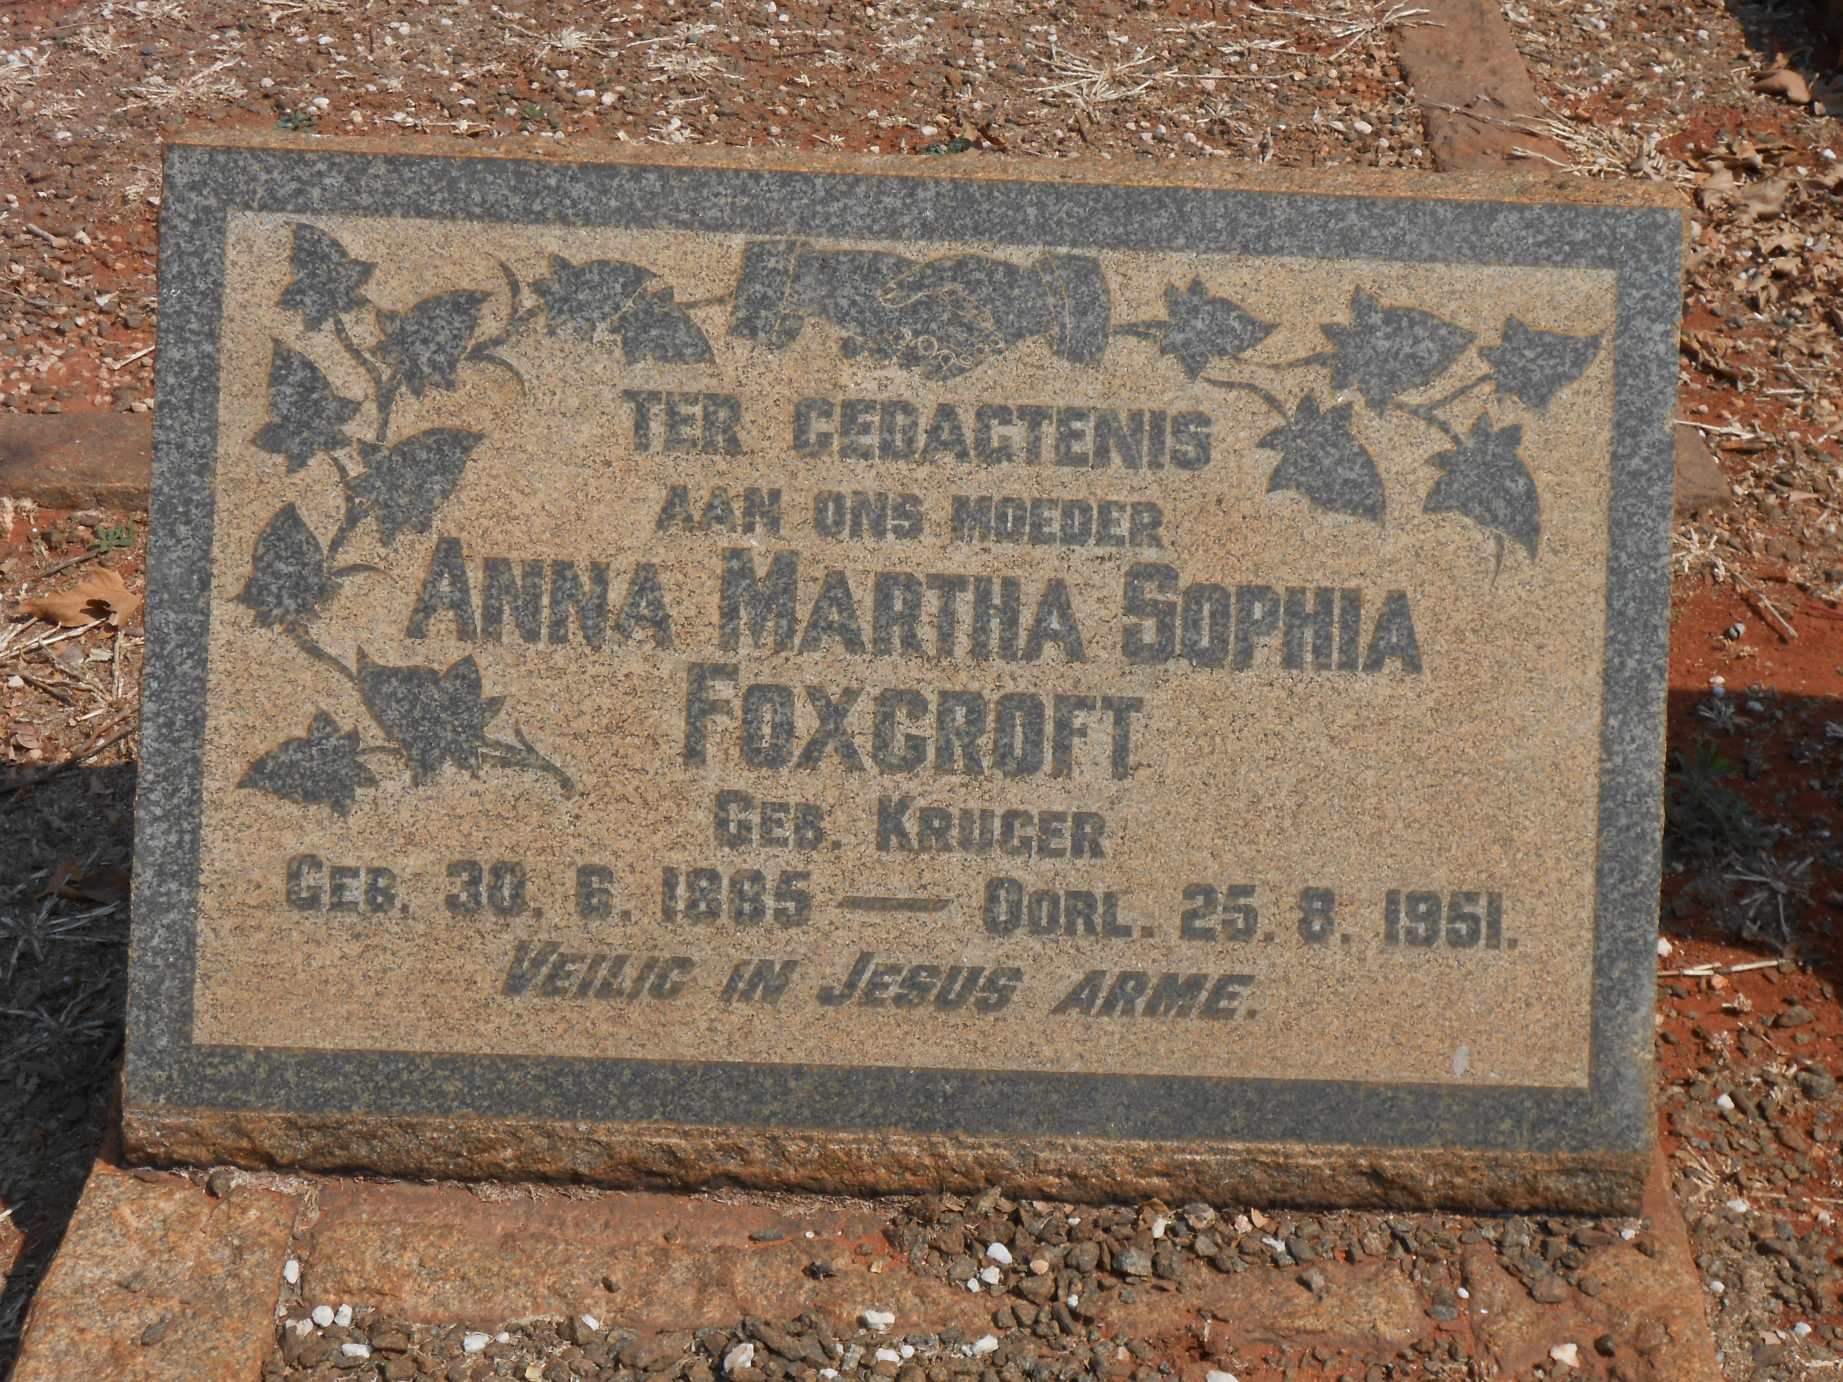 FOXCROFT Anna Martha Sophia nee KRUGER 1895-1951